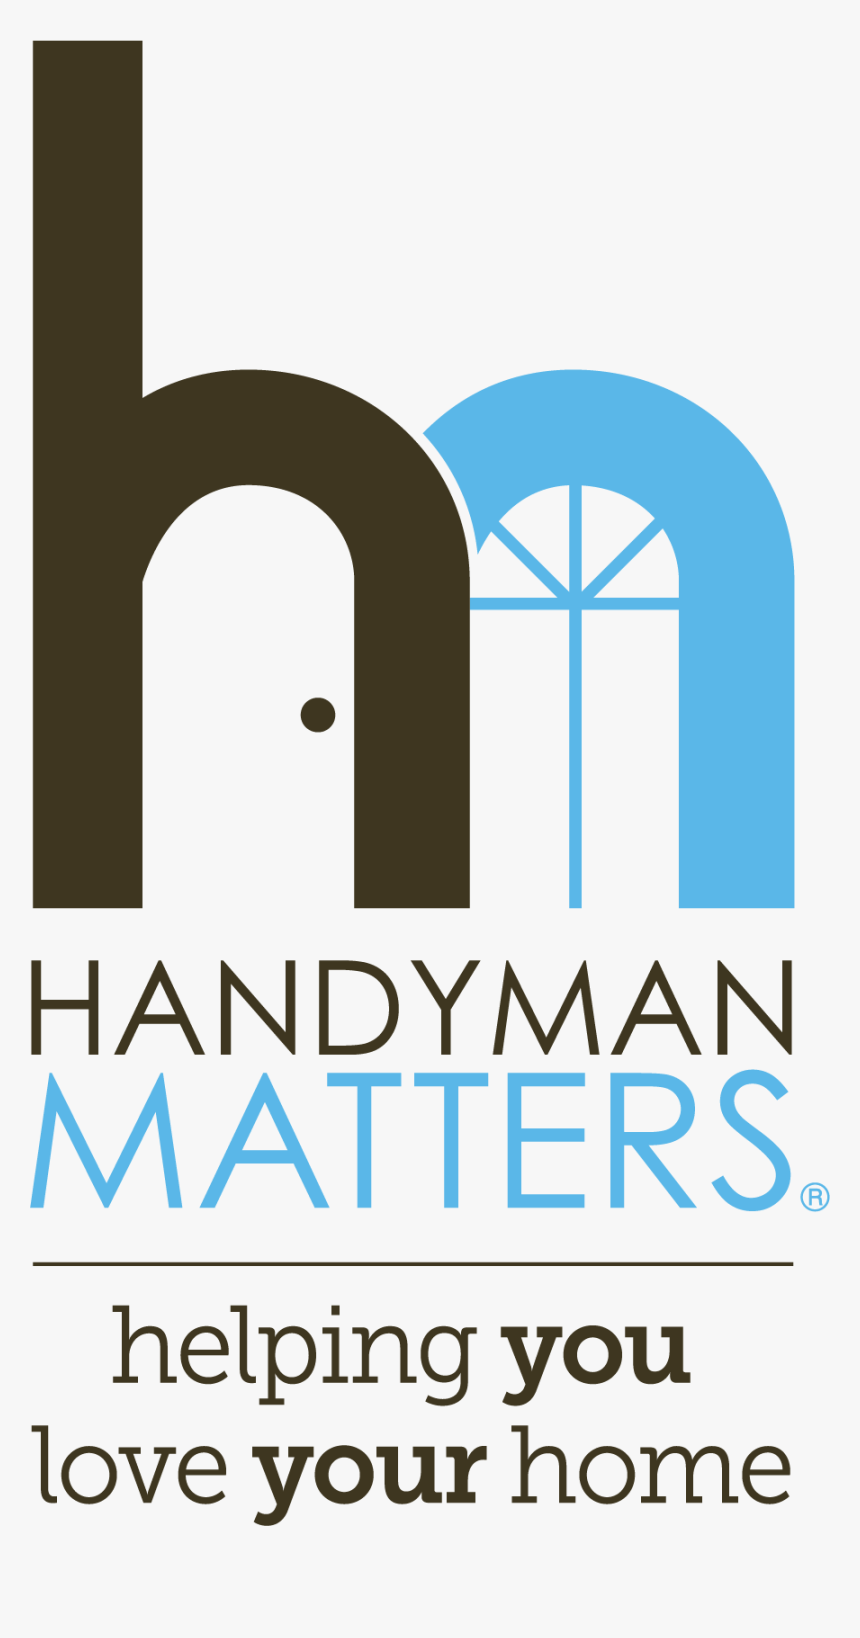 Transparent Handyman Logo Png - Handyman Matters Logo, Png Download, Free Download